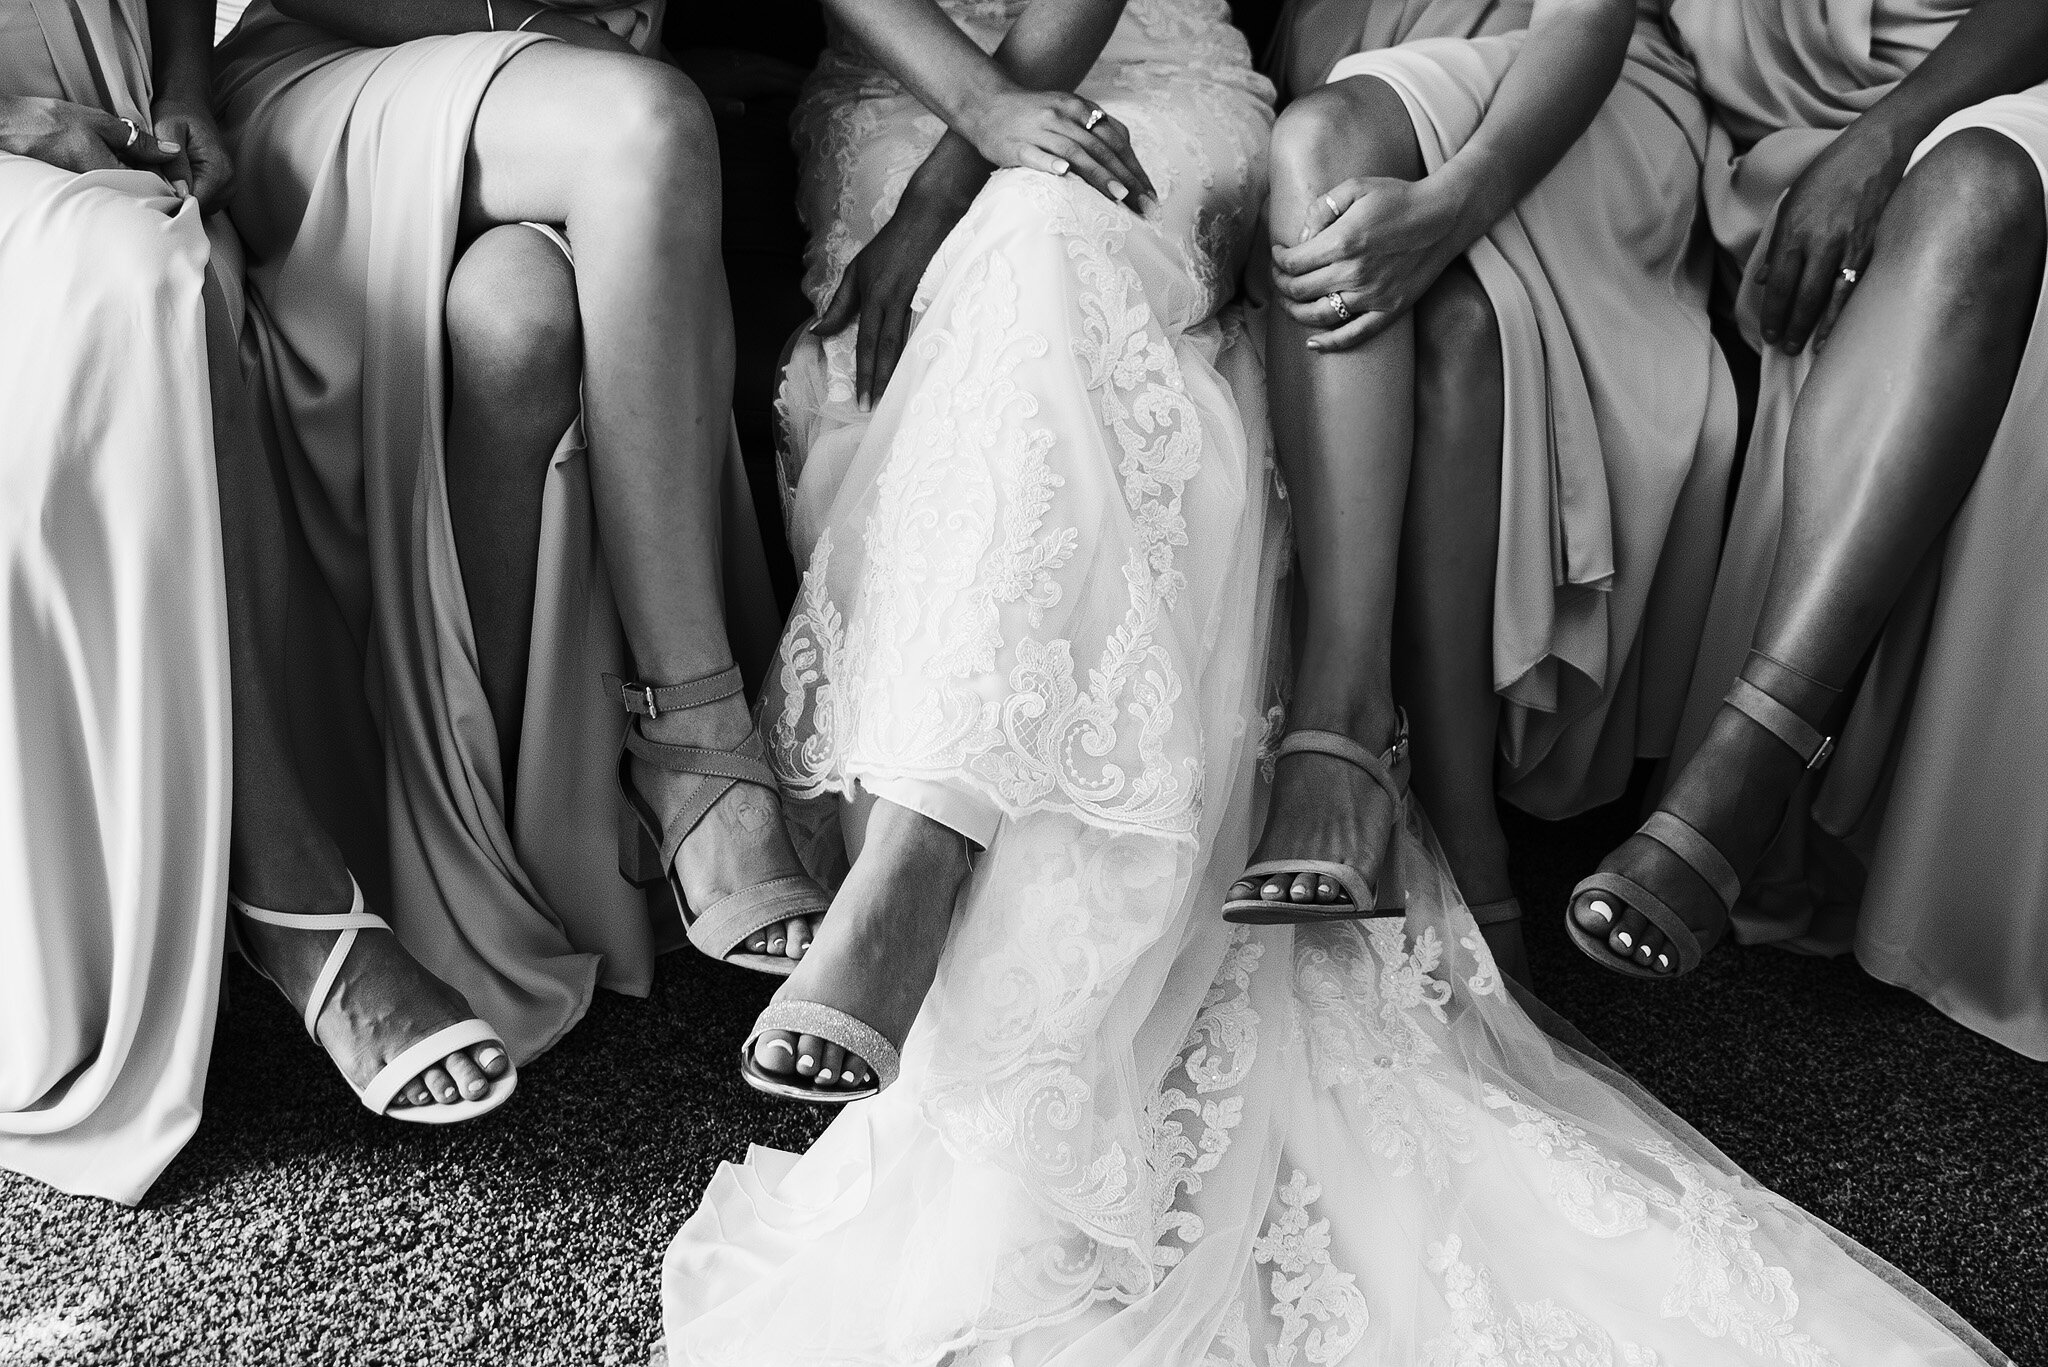 Bride and bridesmaids legs crossed in beautiful dresses